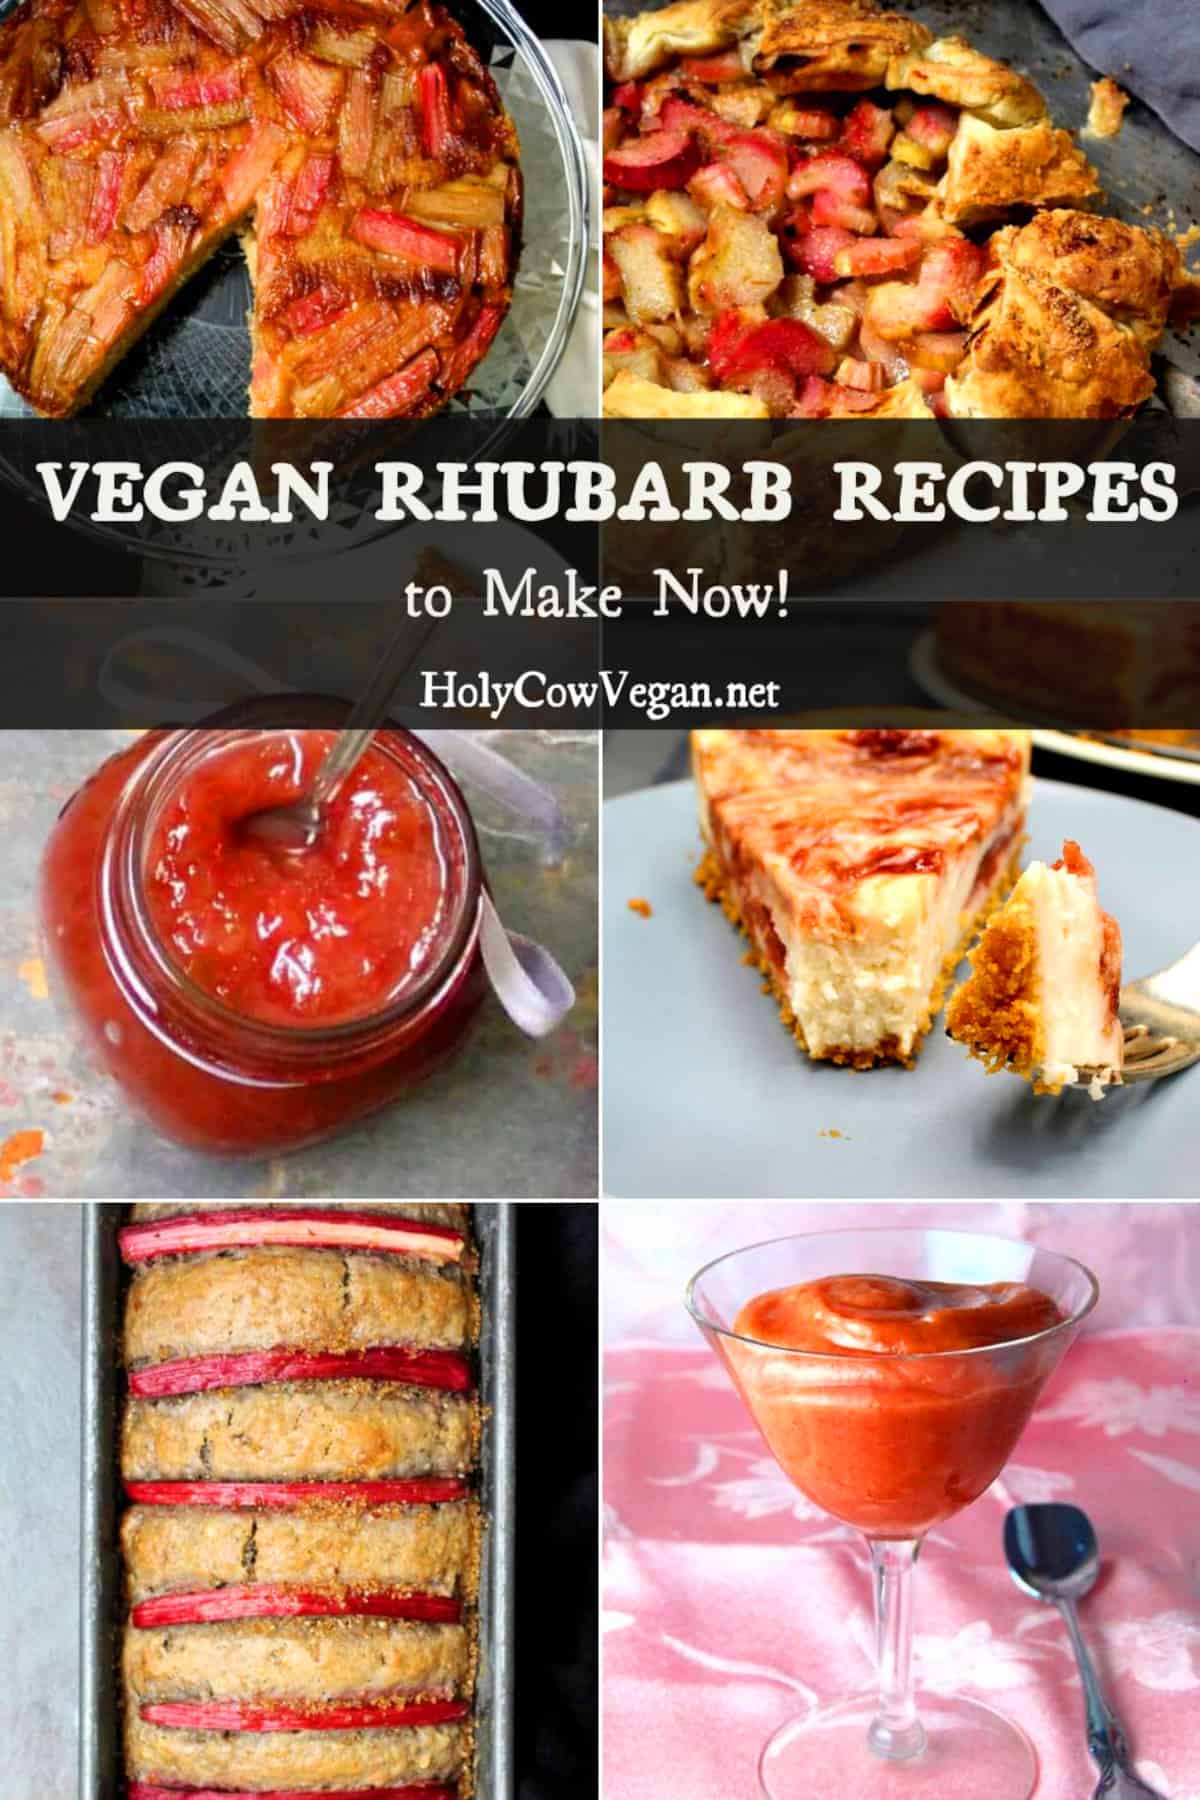 Images of rhubarb pie, rhubarb cake, rhubarb jam, rhubarb bread, rhubarb mousse and rhubarb galette with text that says "vegan rhubarb recipes to make now!"